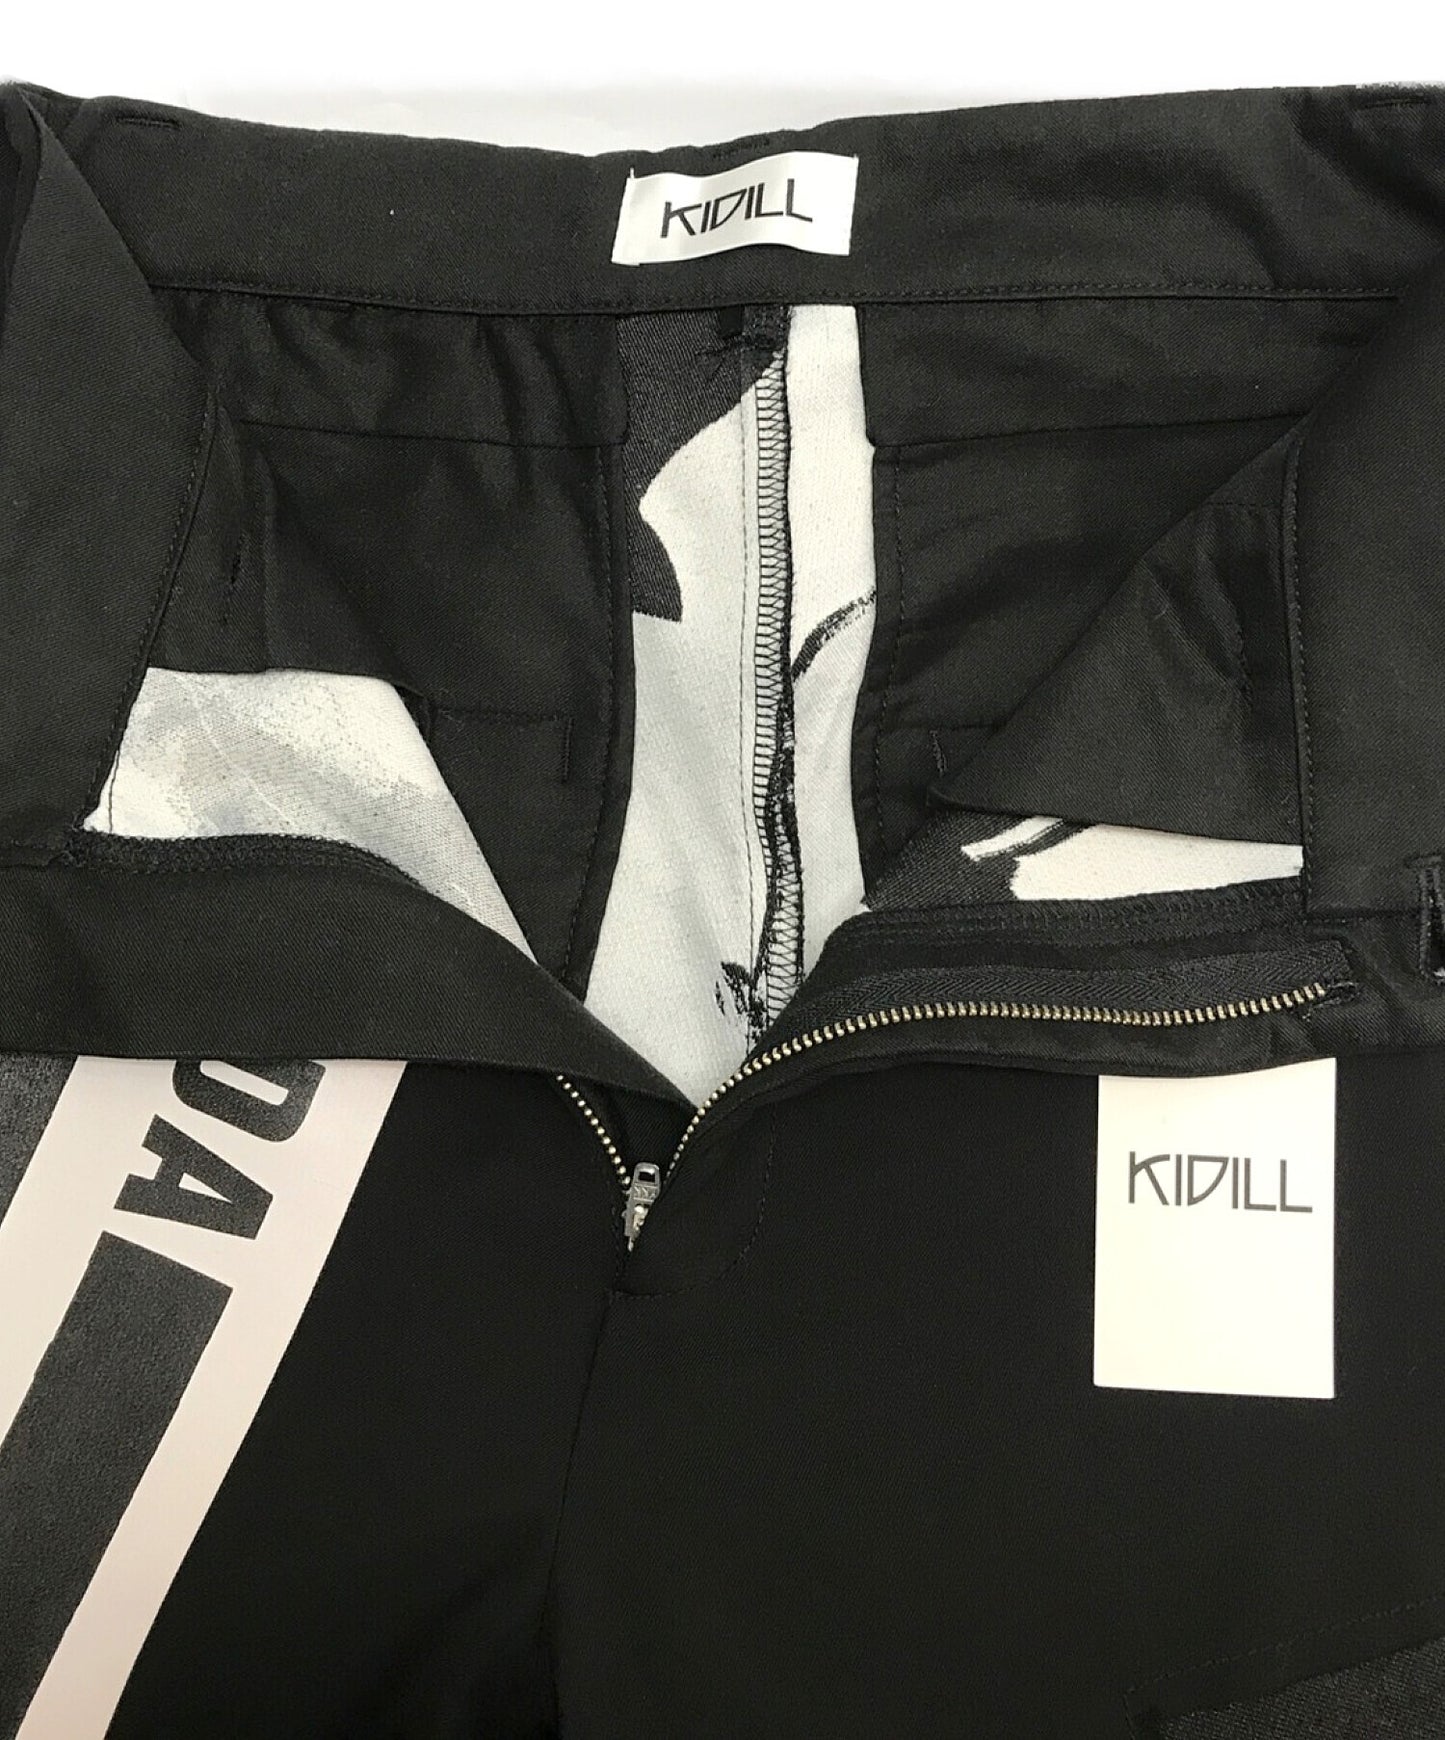 Kidill对接货物裤/图形裤子KL541